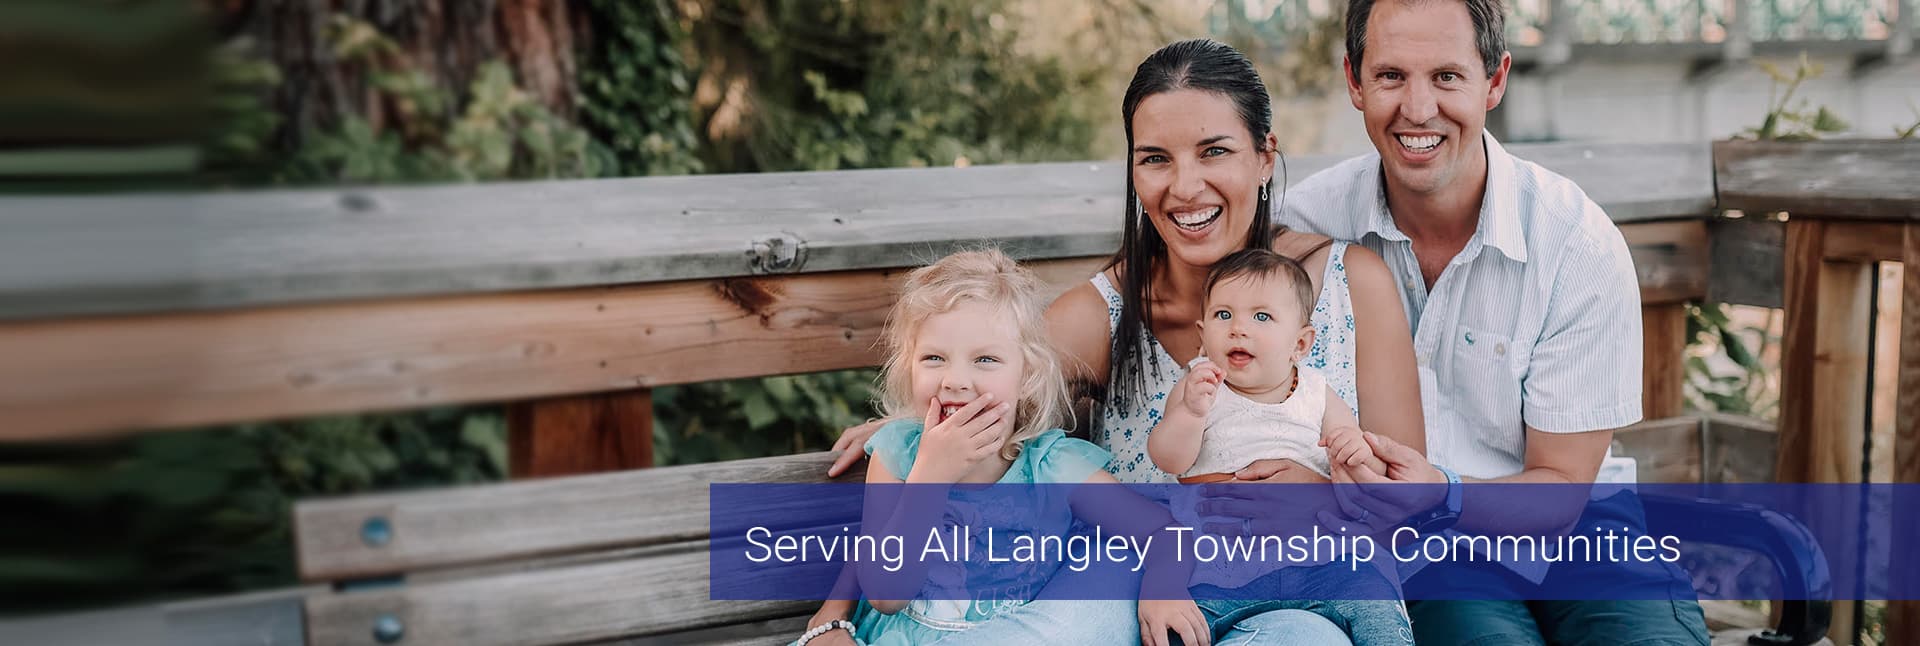 JVR Dental - banner image of family. Serving All Langley Township Communities